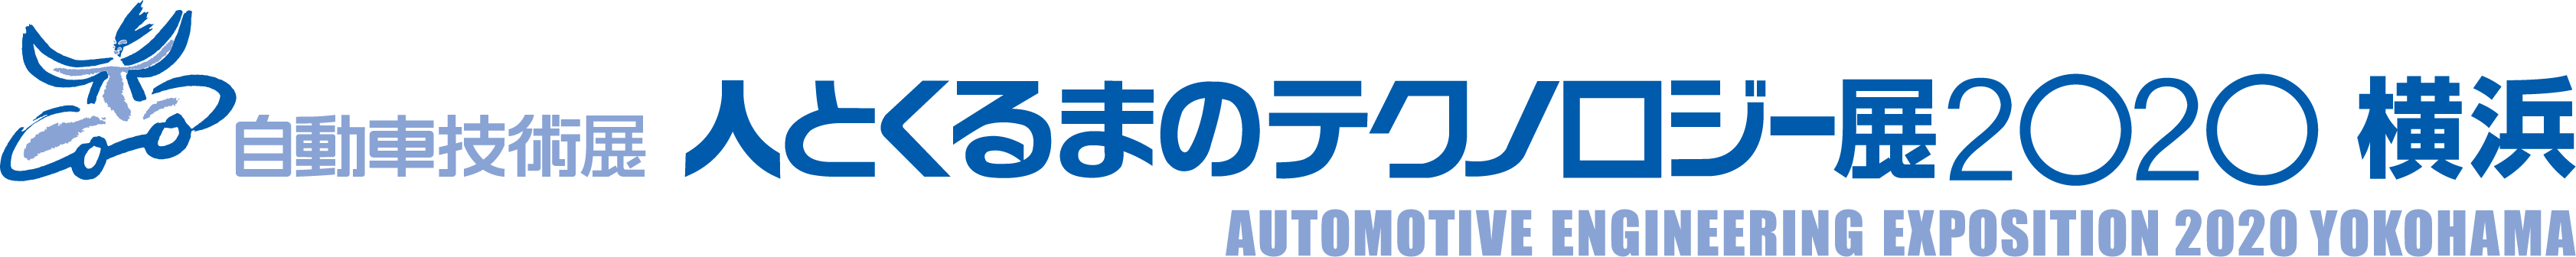 AUTOMOTIVE ENGINEERING EXPOSITION 2020 YOKOHAMA